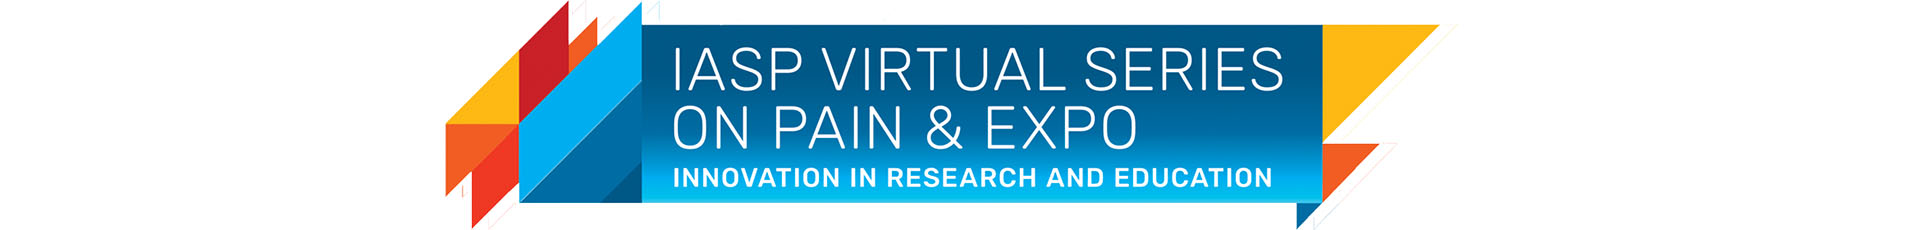 Data Blitz: IASP Virtual Series on Pain & Expo Event Banner